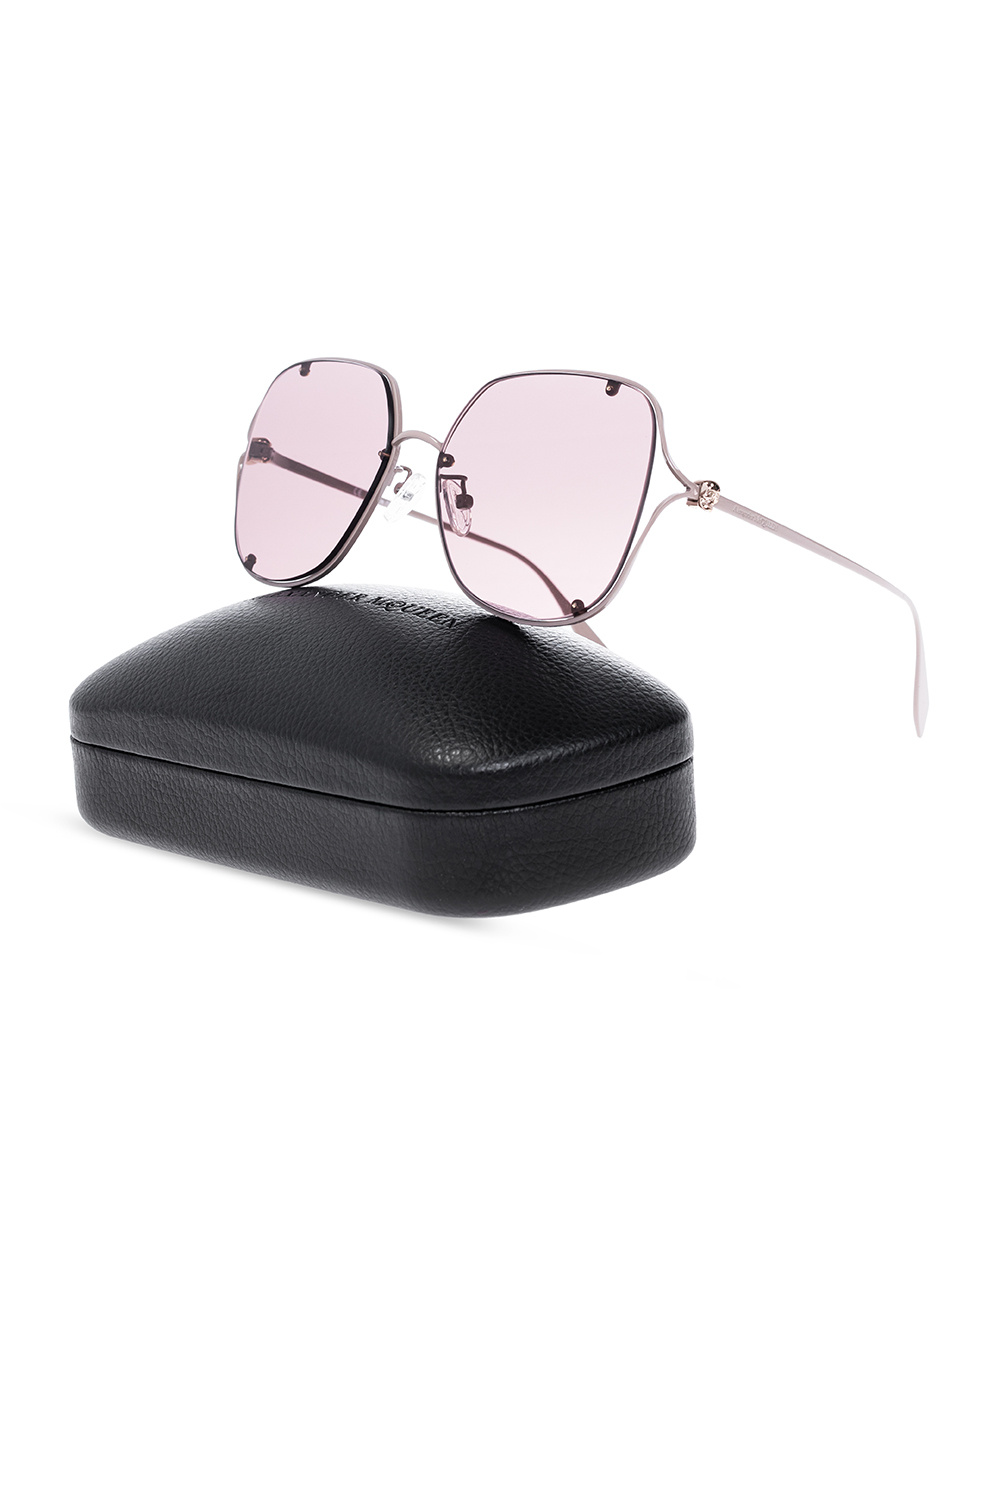 Alexander McQueen amiri sunglasses